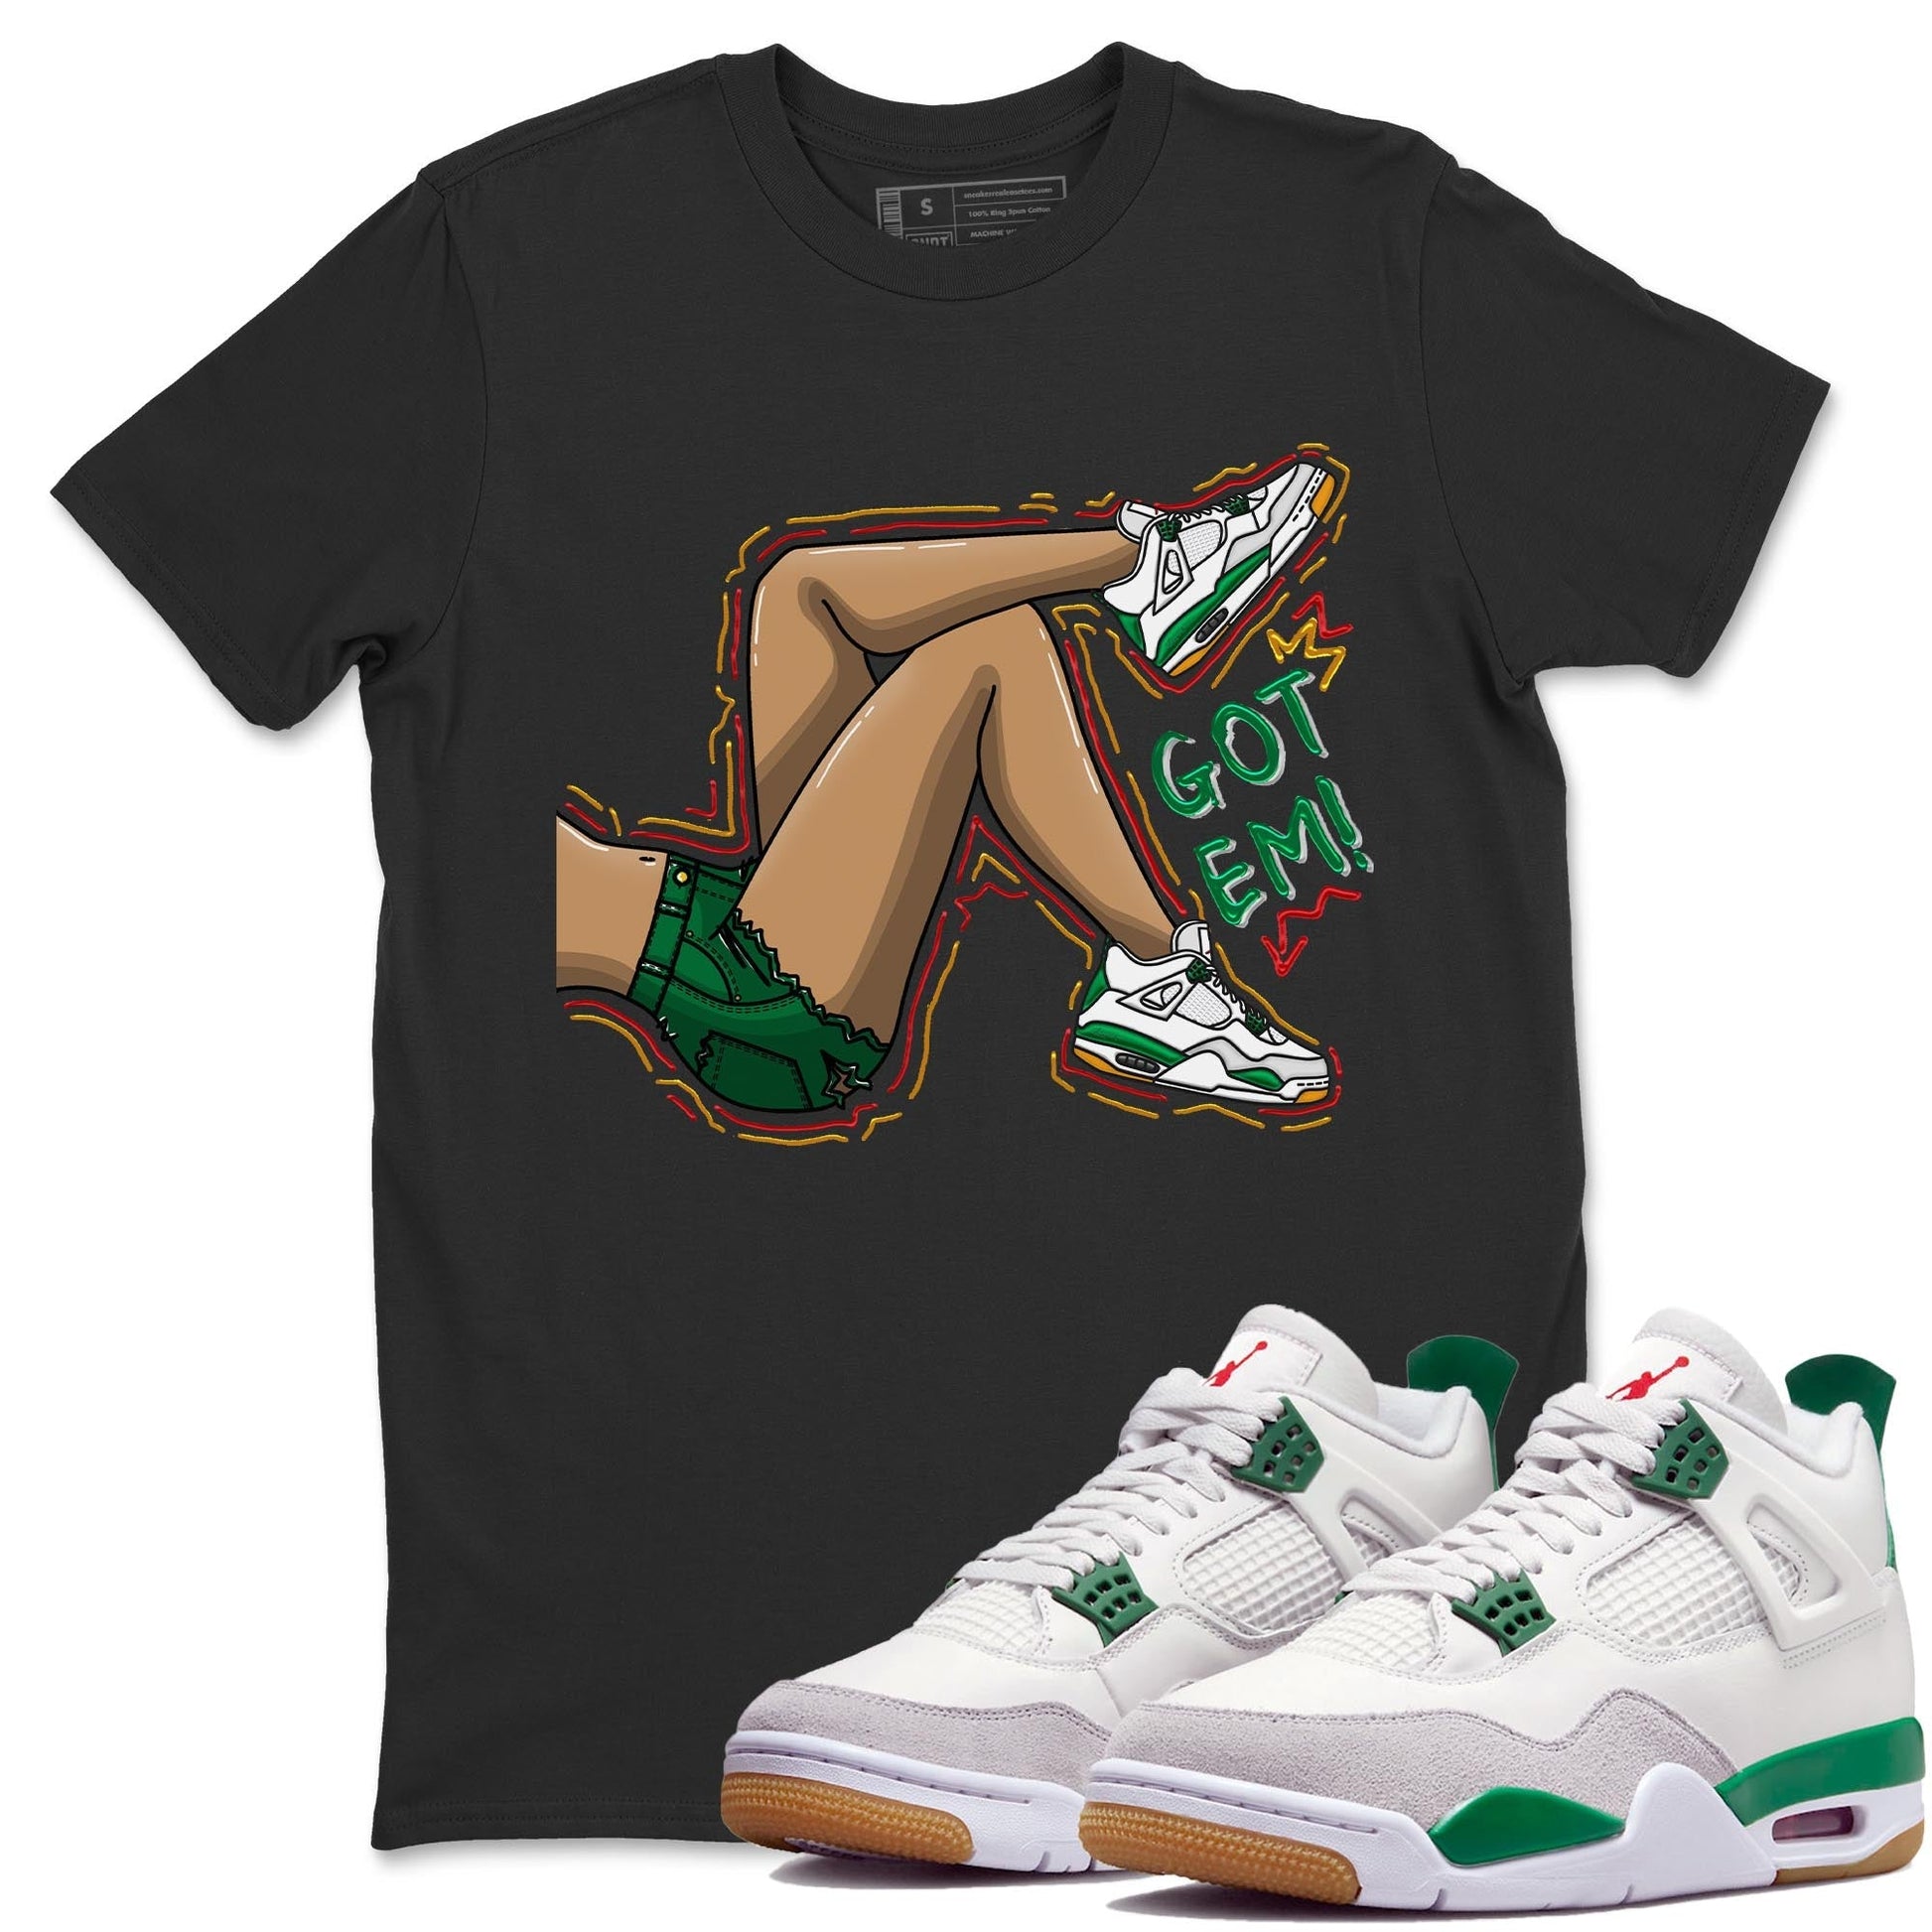 Jordan 4 Pine Green SB Sneaker Match Tees Got Em Legs Sneaker Tees 4s Pine Green Nike SB Sneaker Tees Sneaker Release Shirts Unisex Shirts Black 1